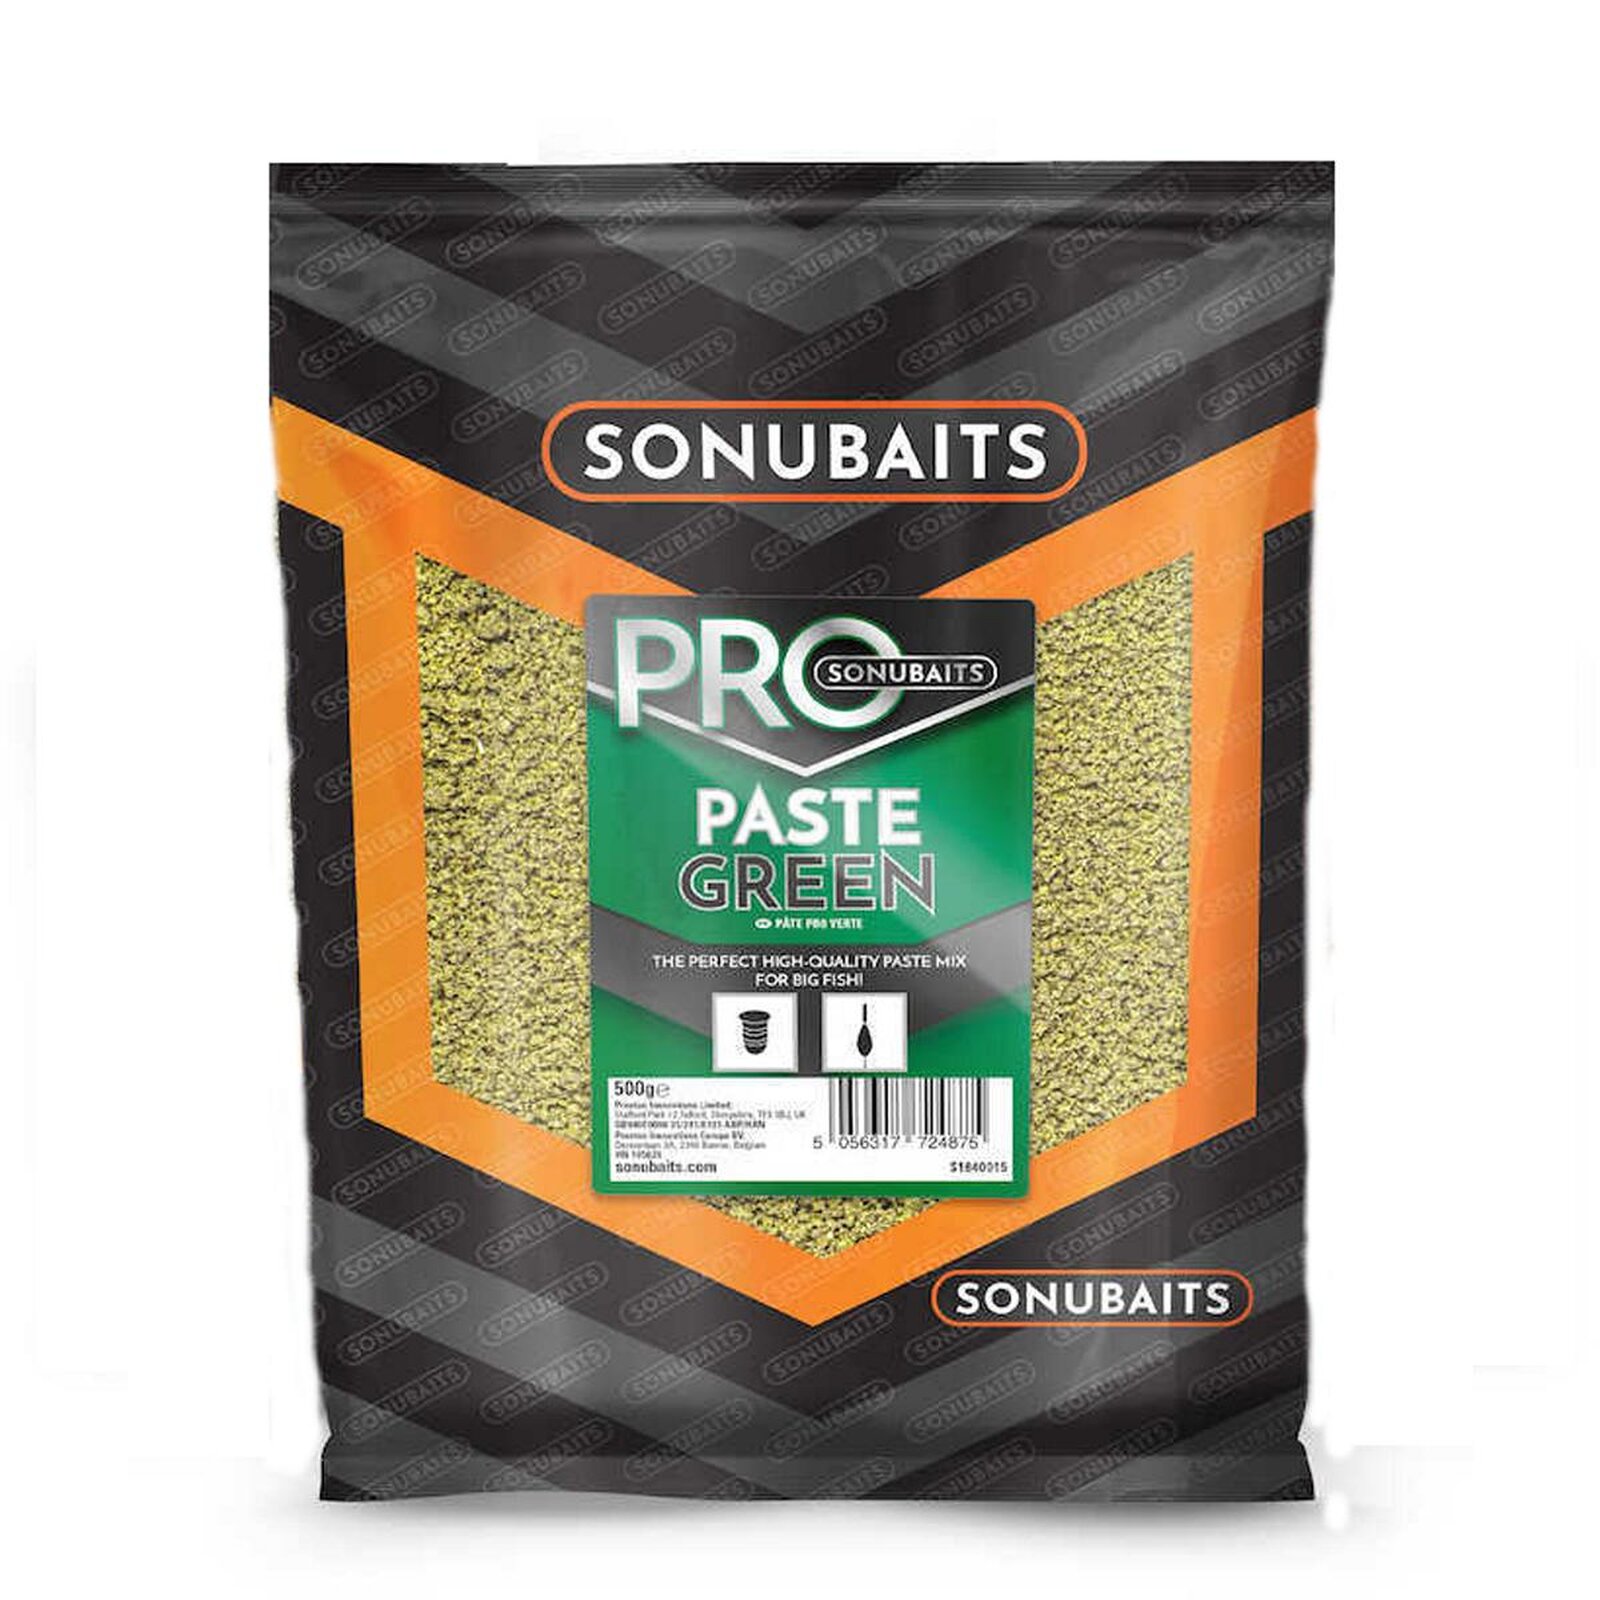 Sonubaits Pro Paste Green 500g